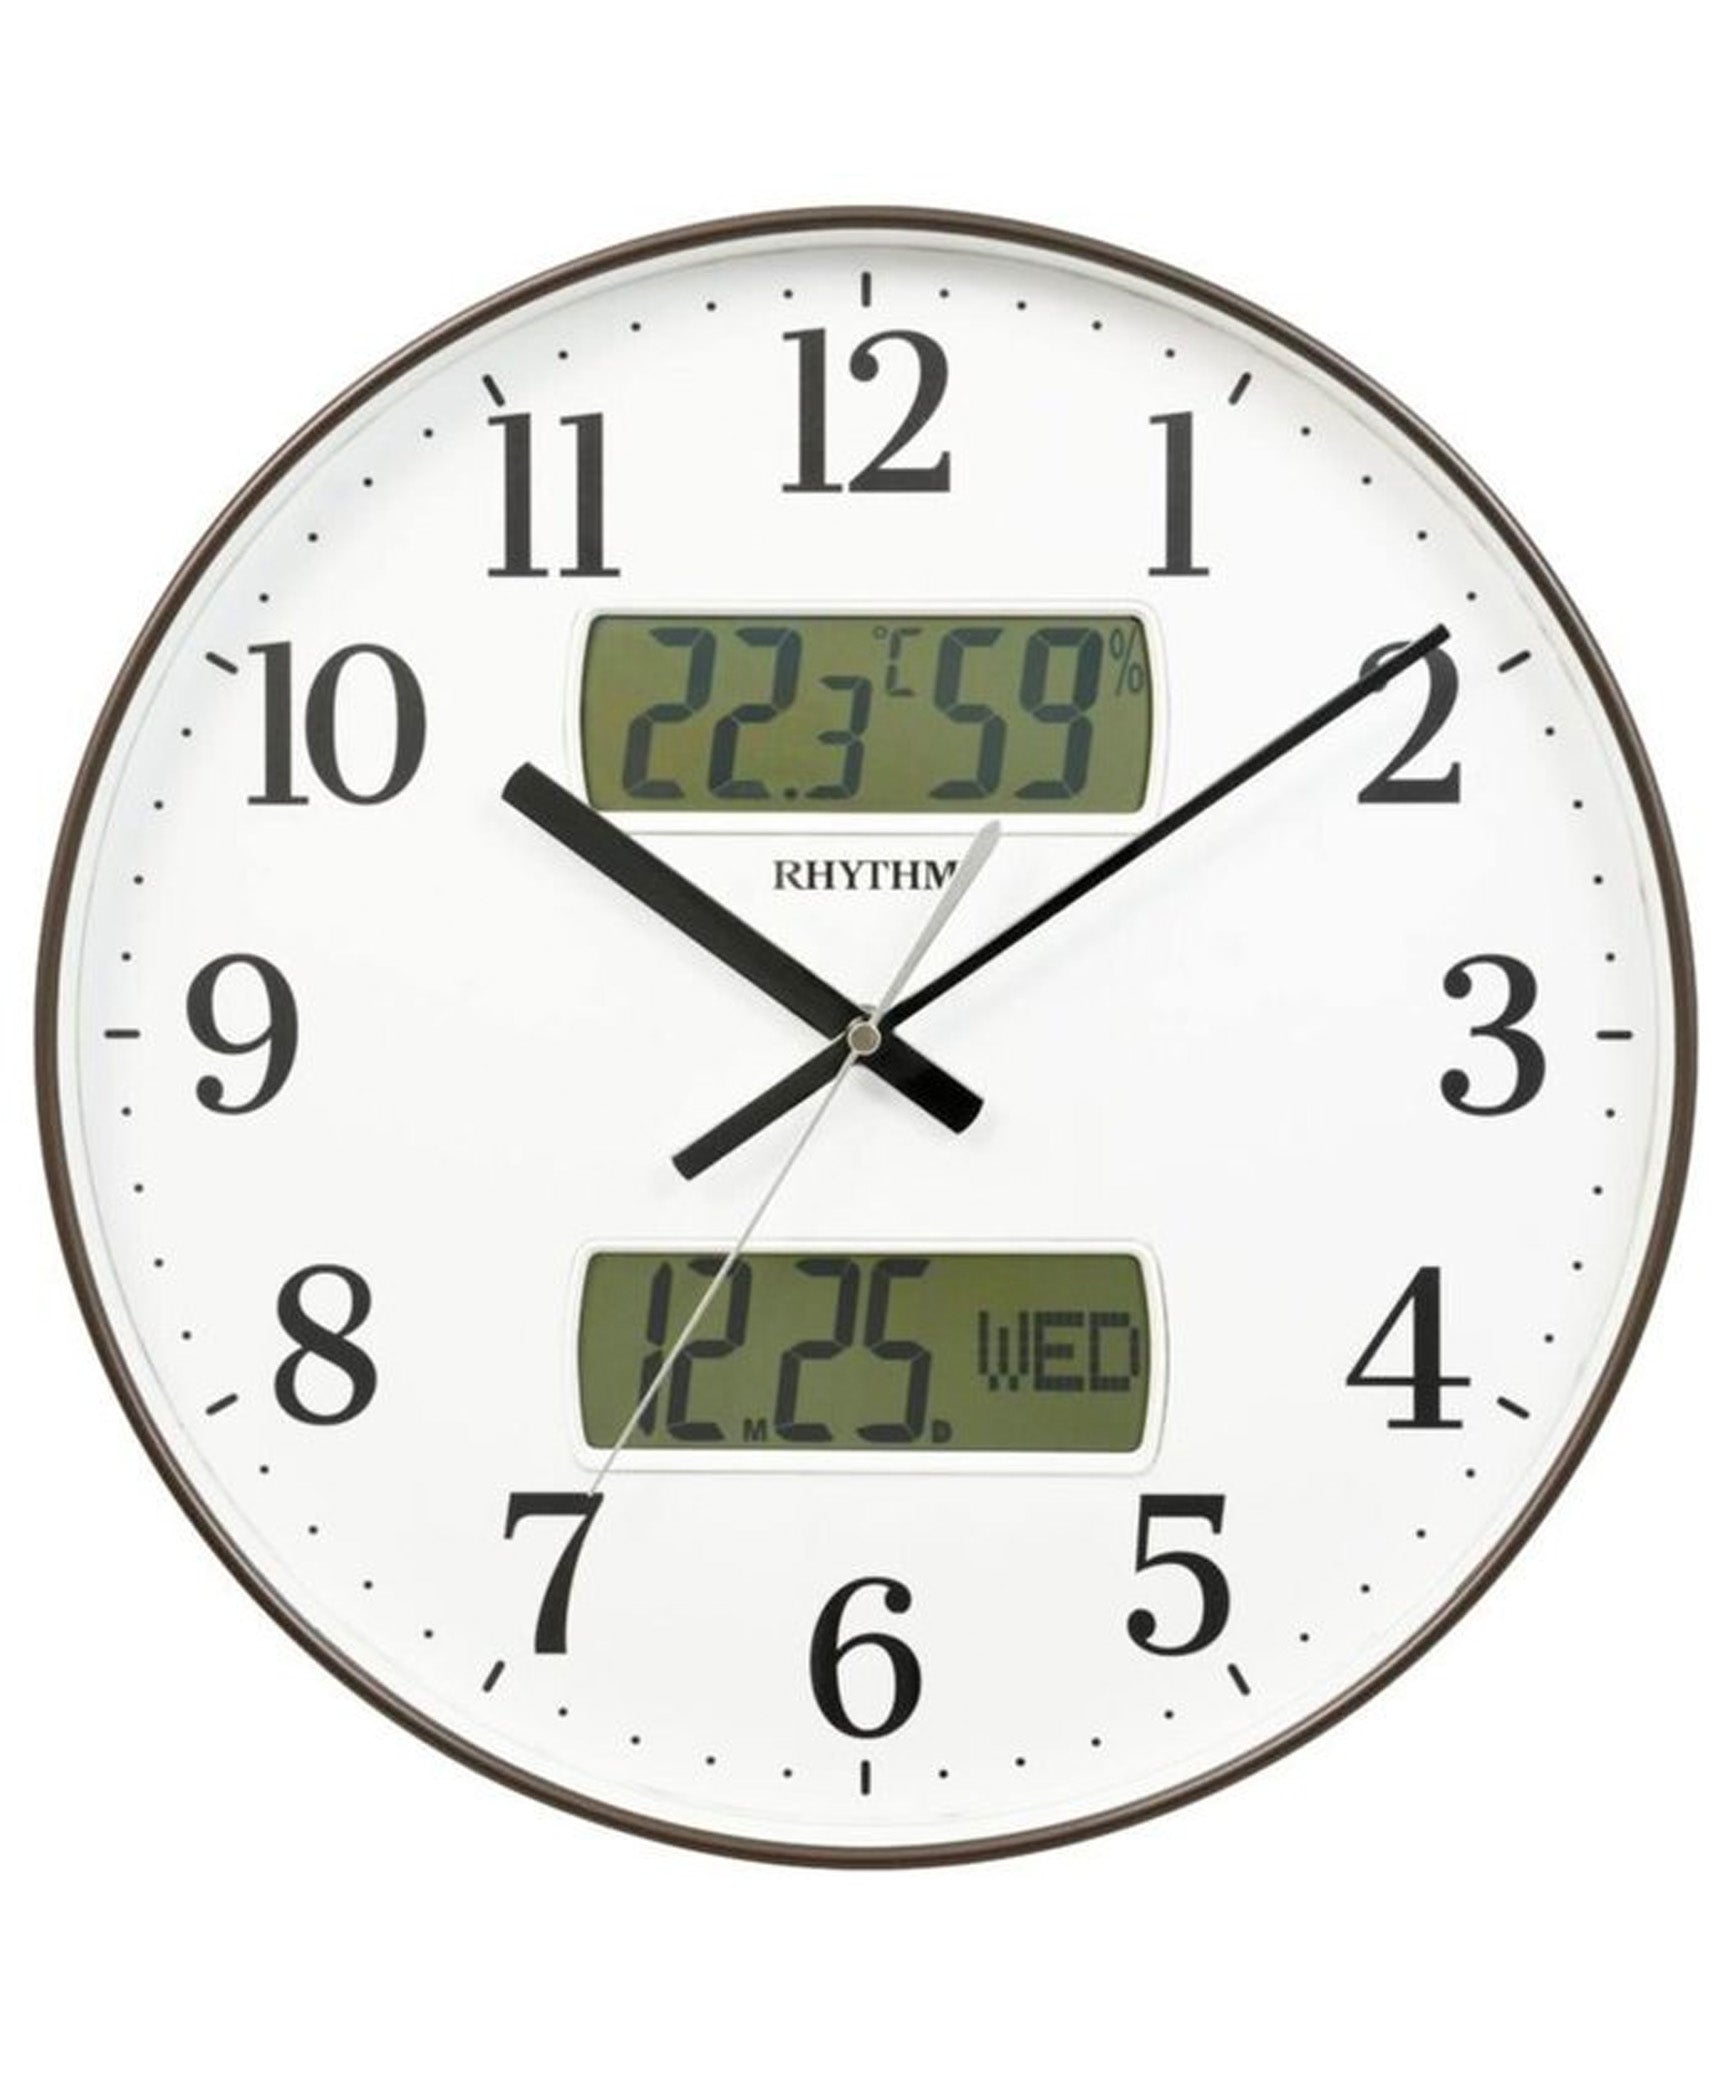 Rhythm Wall Analog Clock CFG724NR06 | stylish watch | accurate timekeeping | wall clock | round clock | Casio watch | wall watch | home décor | timepiece | Halabh.com